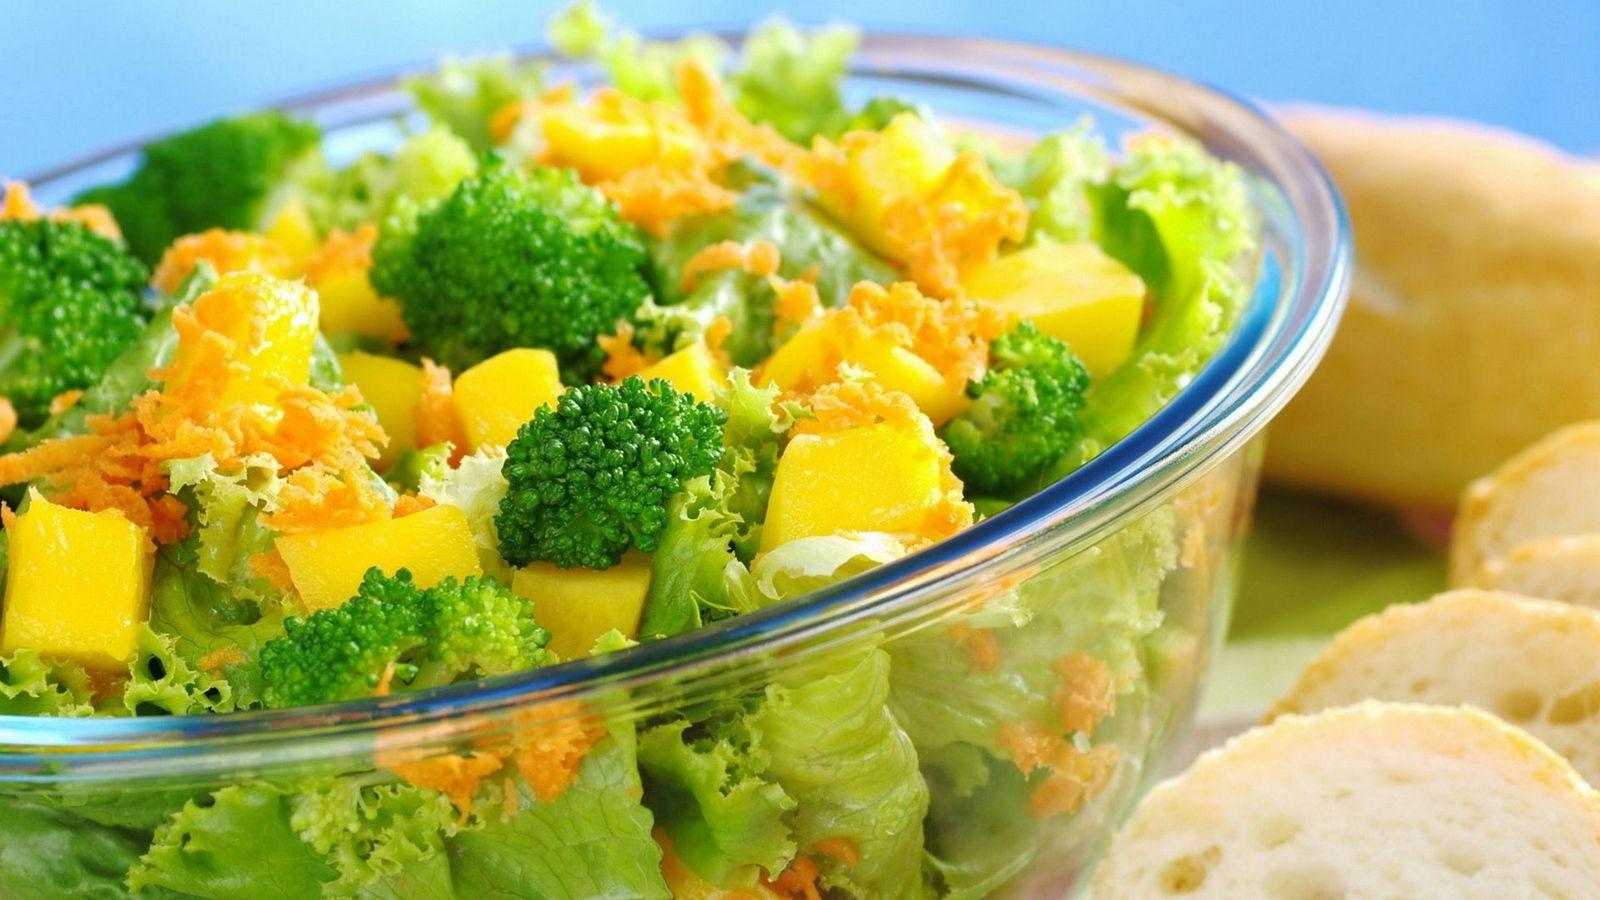 Download wallpaper 1600x900 salad, vegetables, greens, healthy food